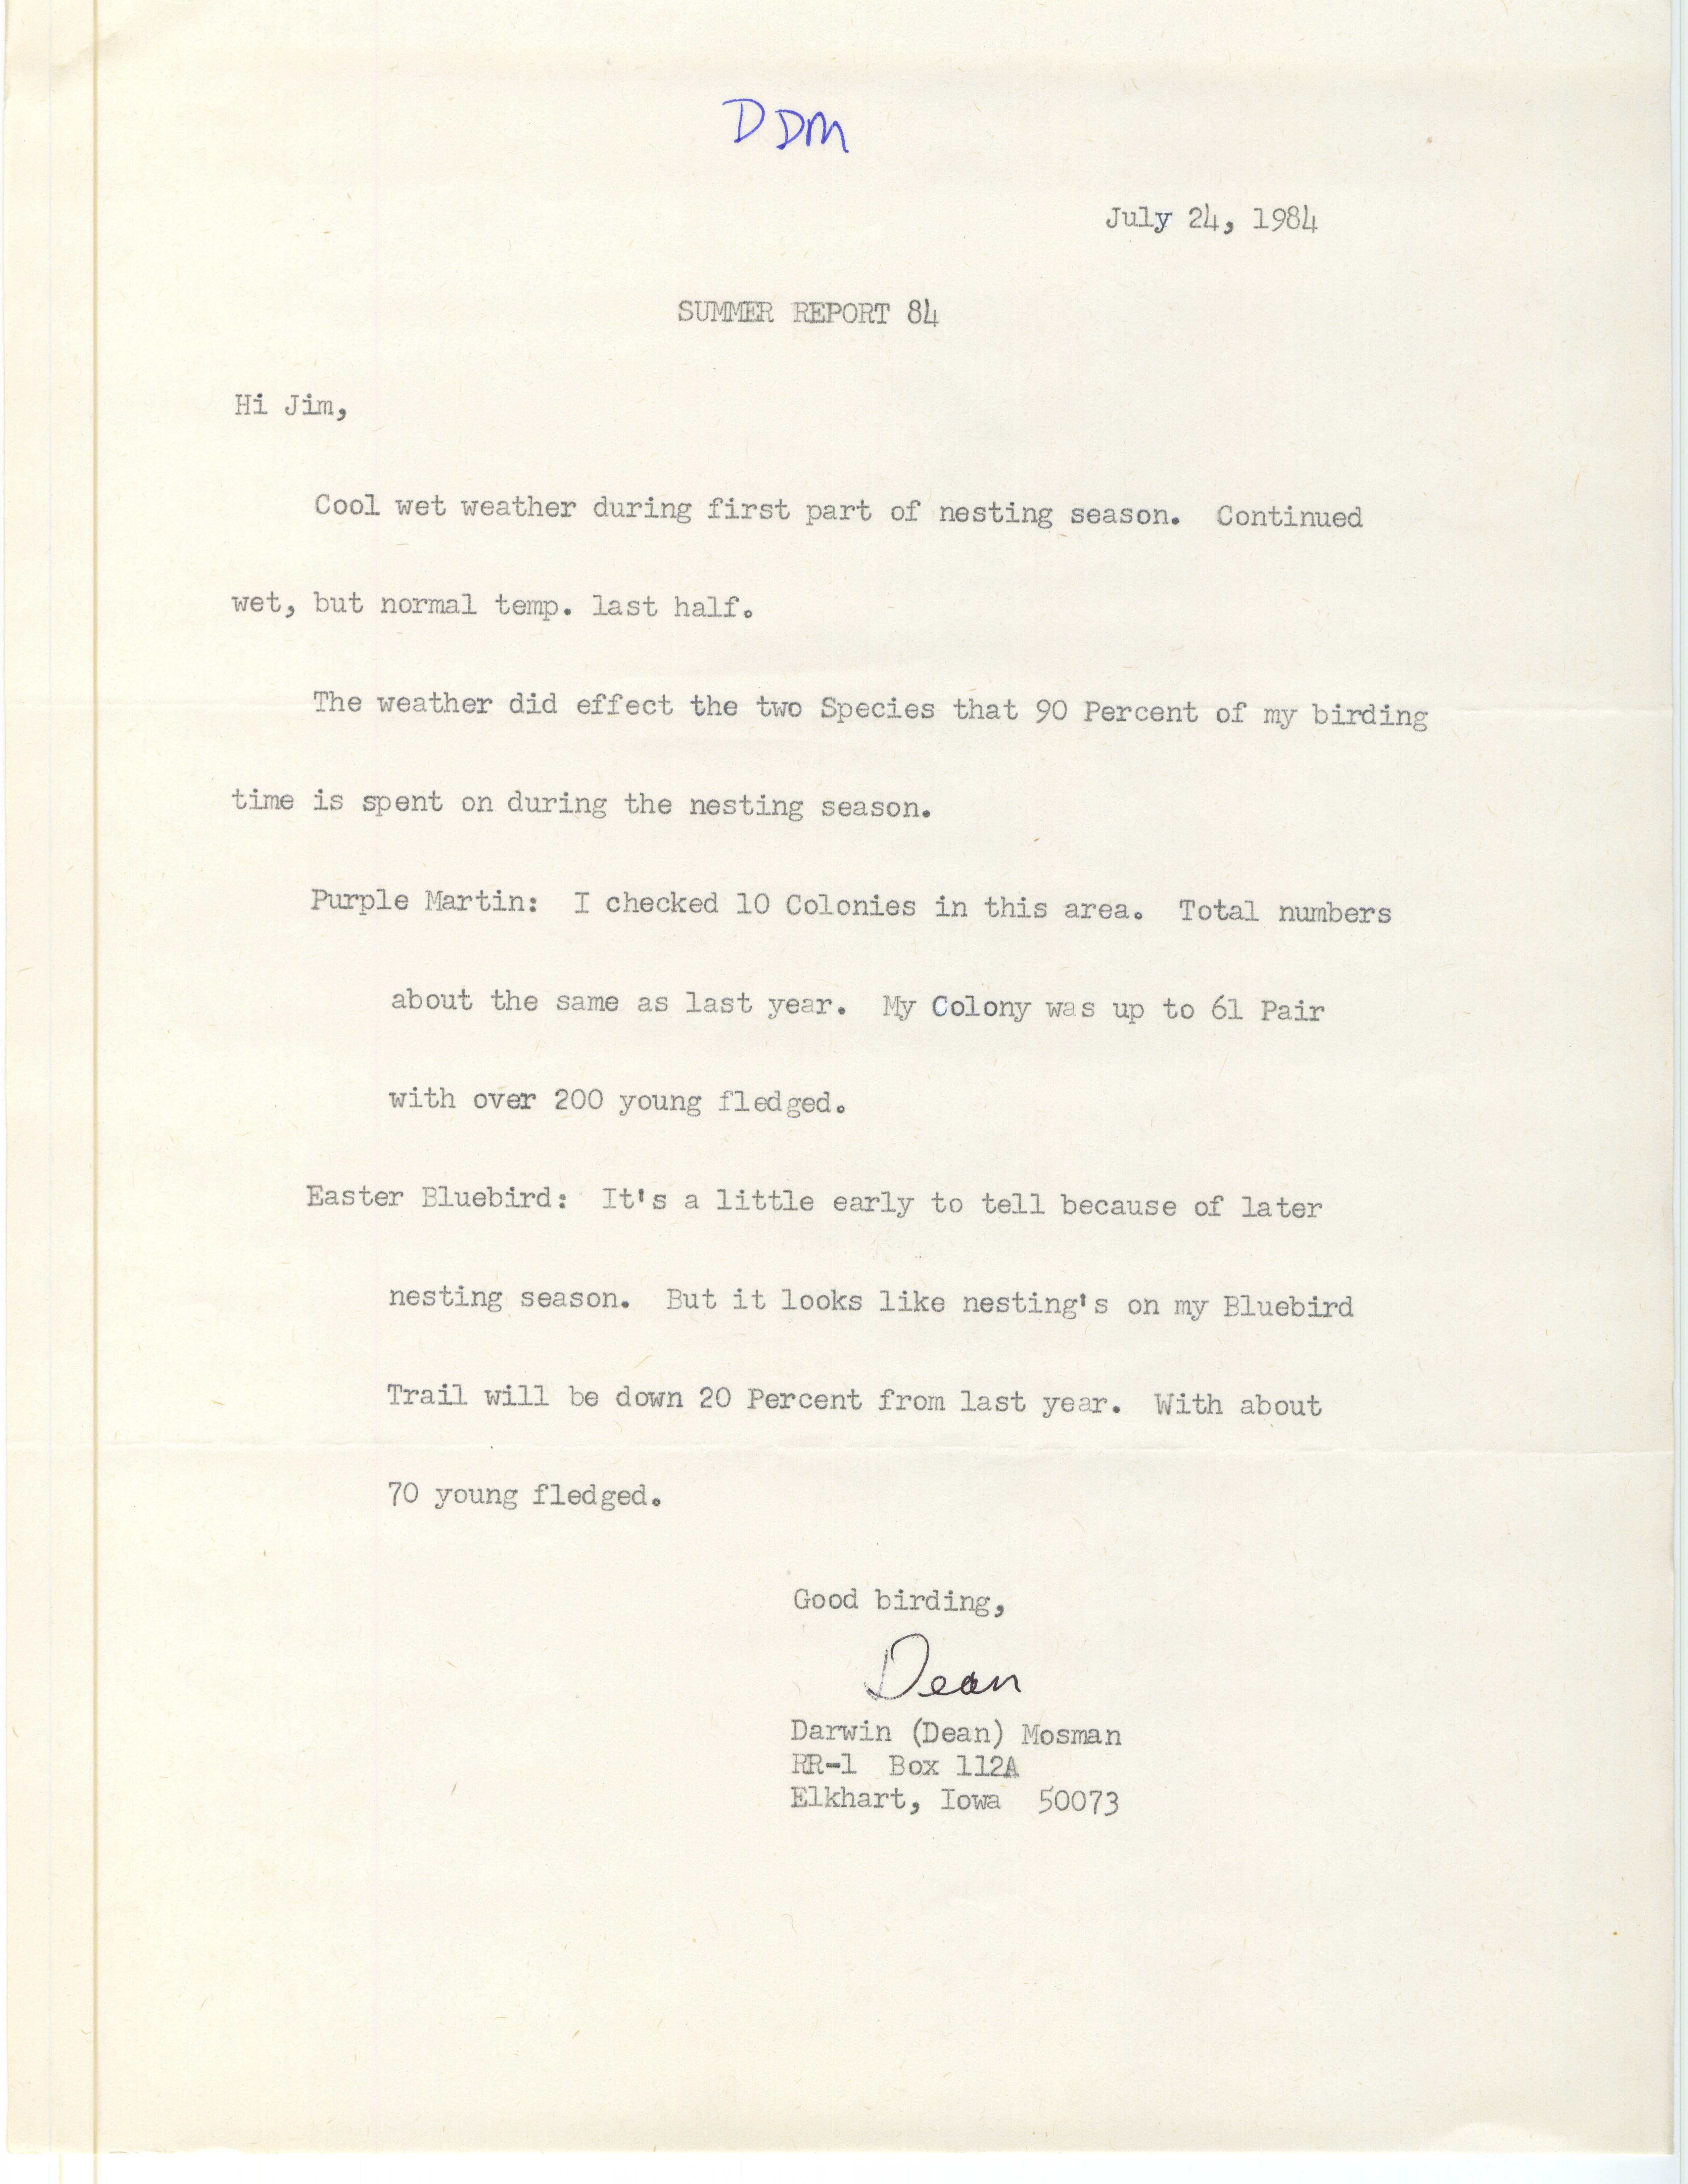 Dean Mosman letter to James J. Dinsmore regarding nesting of Purple Martins and Eastern Bluebirds, July 24, 1984